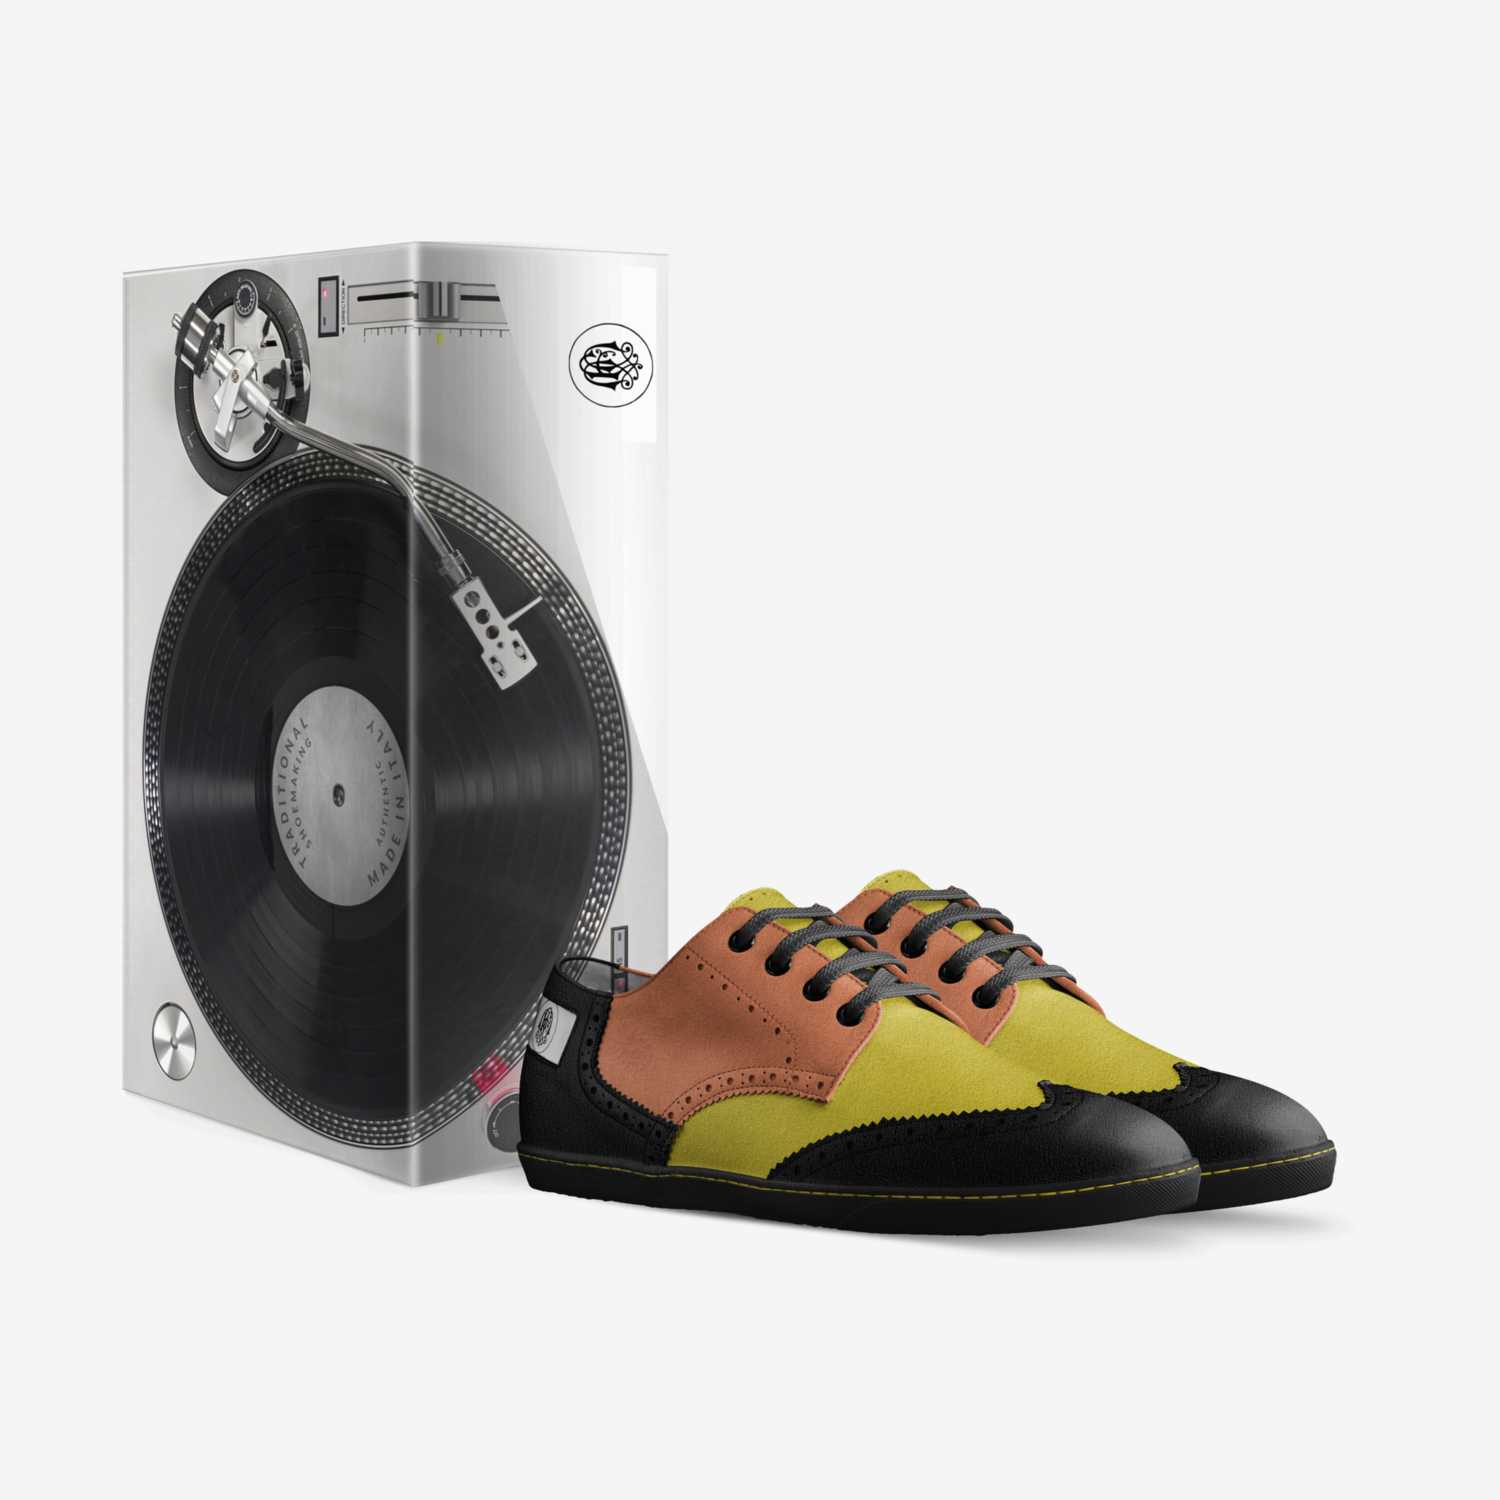 Nico custom made in Italy shoes by Nicolas Friedland-meriaux | Box view